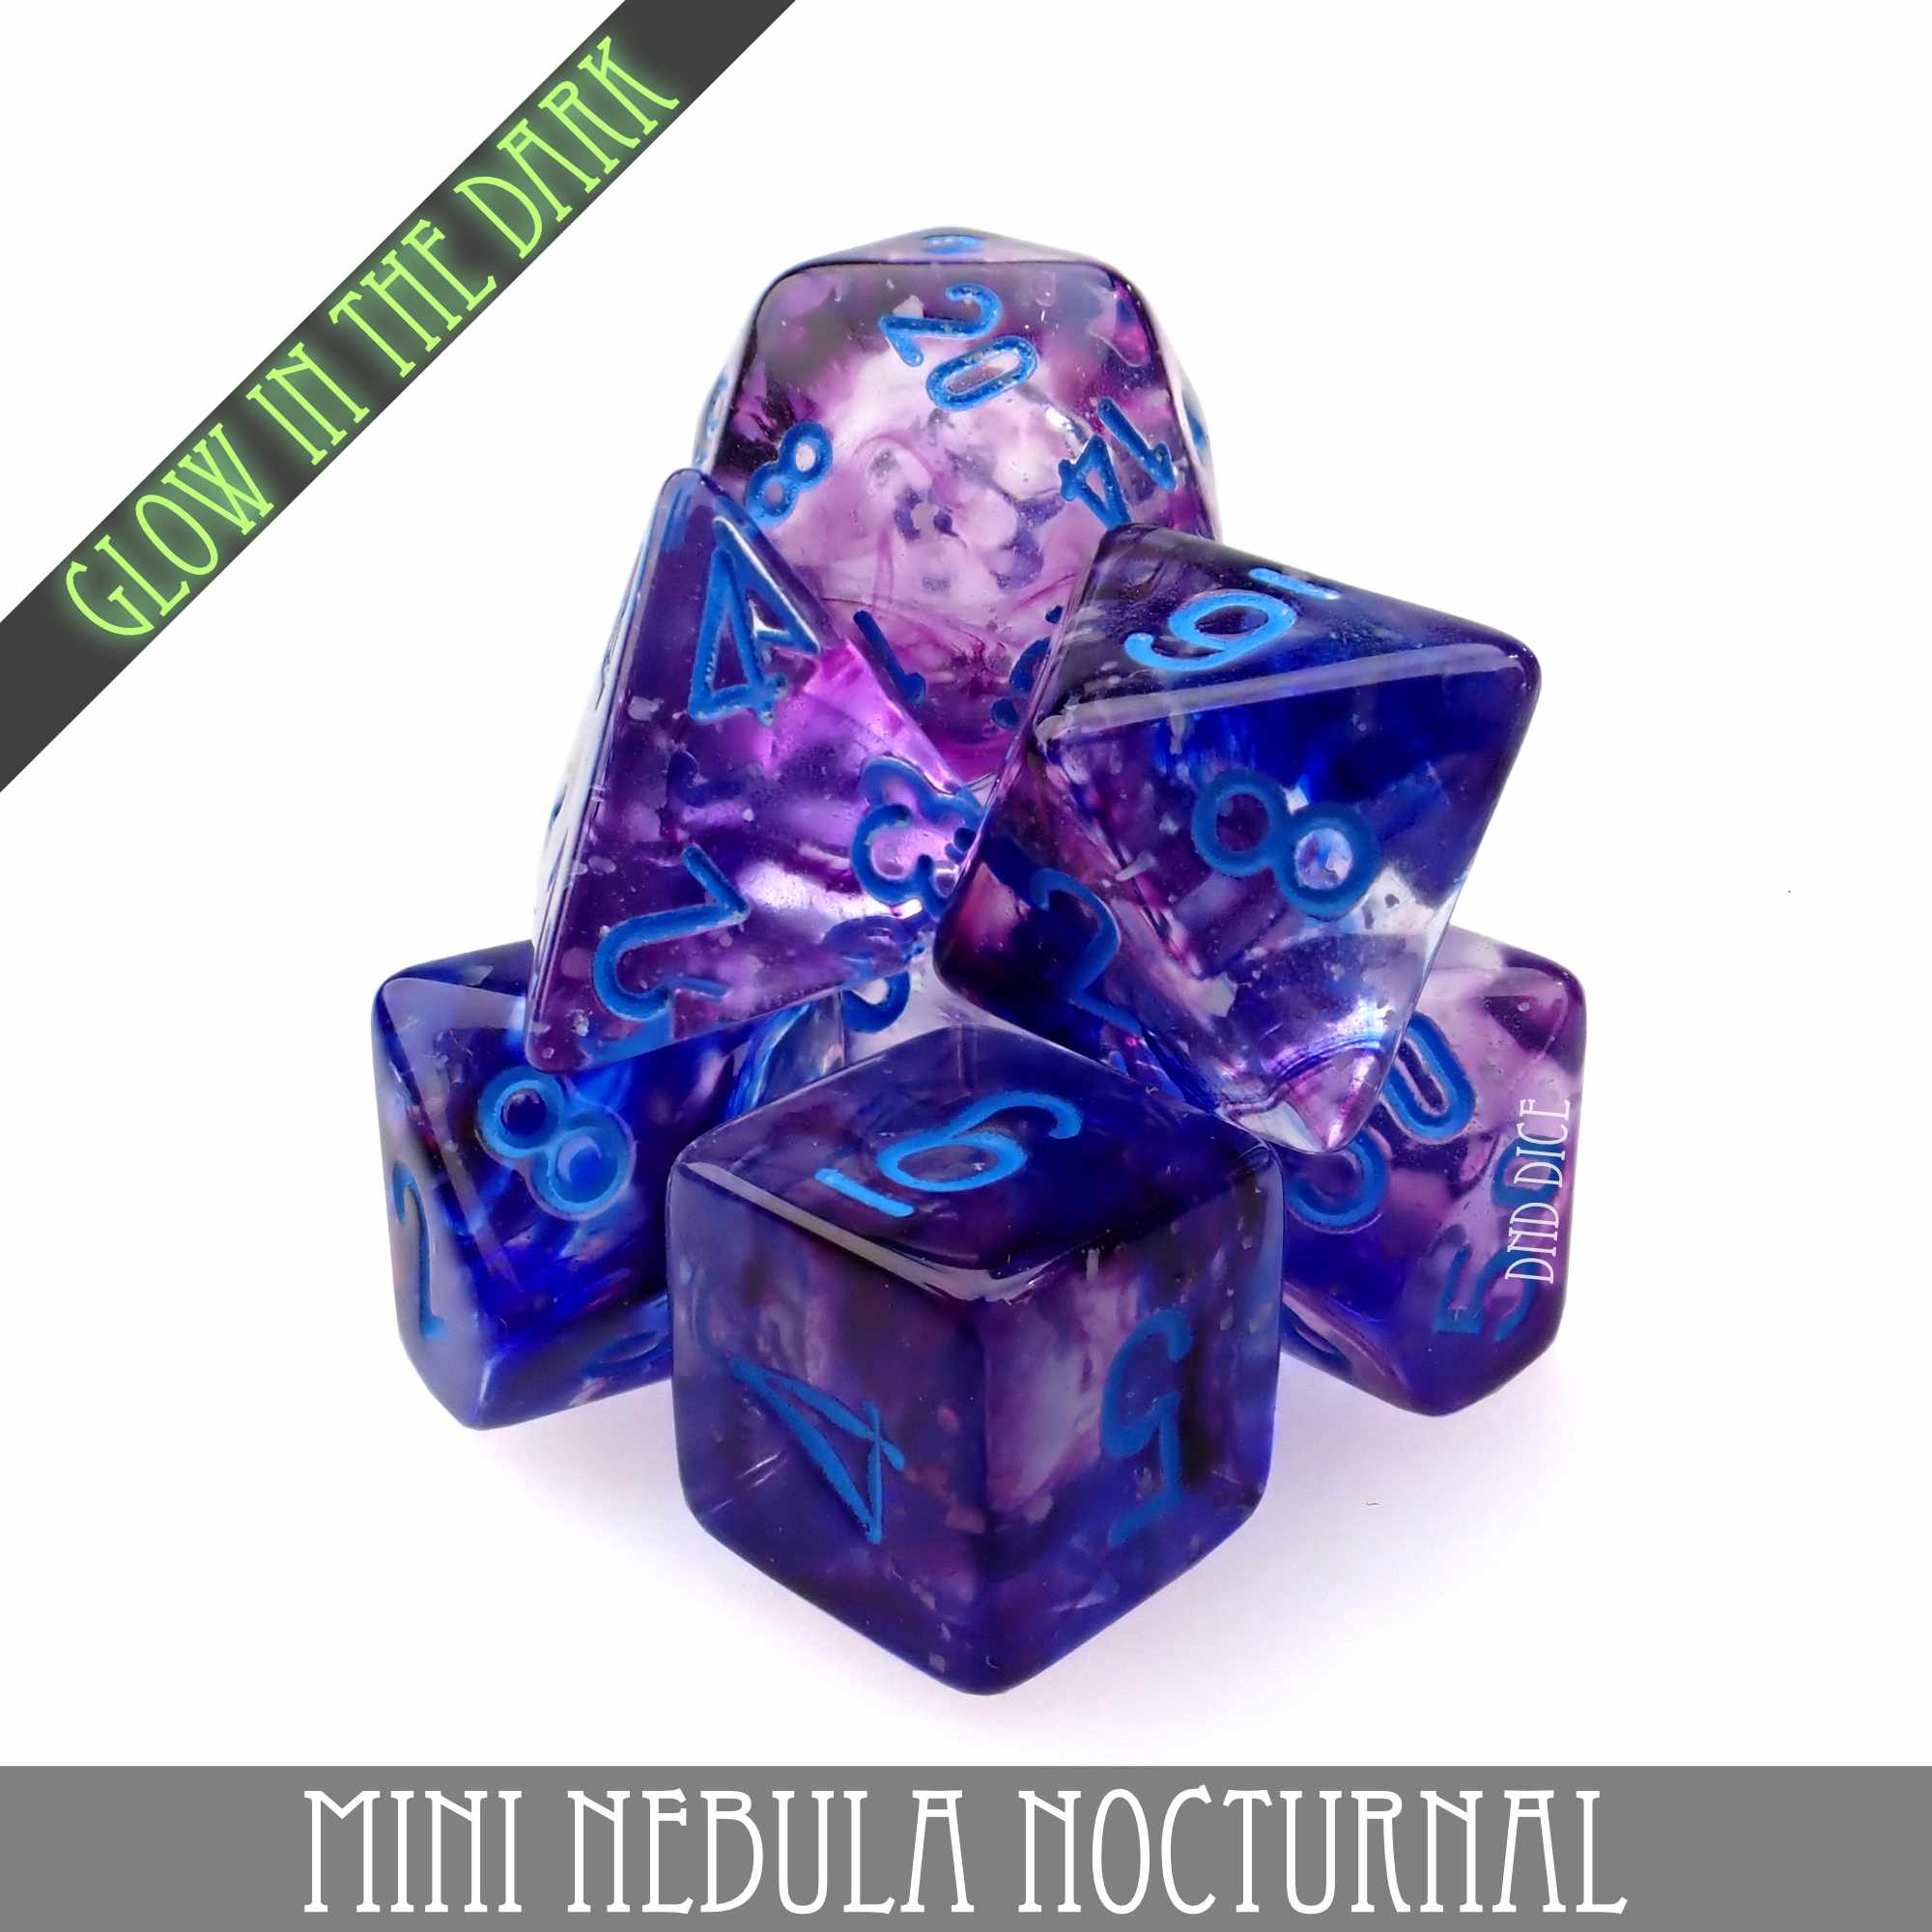 Mini Nebula Nocturnal Dice Set (10mm)